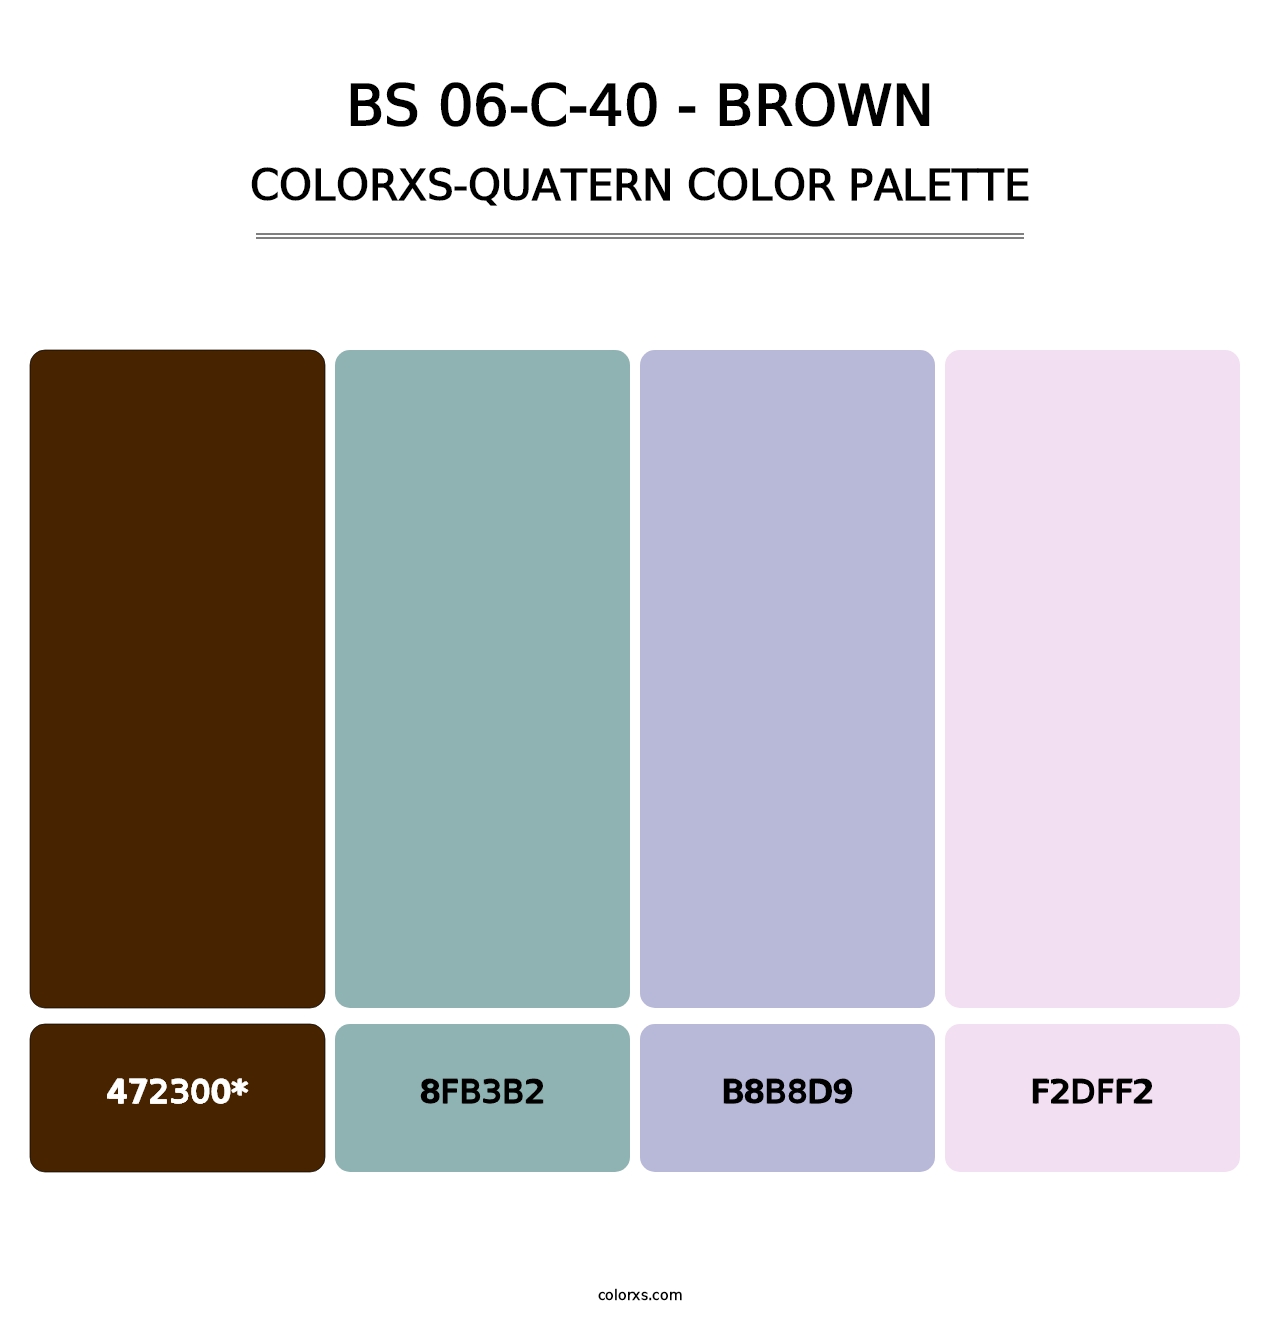 BS 06-C-40 - Brown - Colorxs Quatern Palette